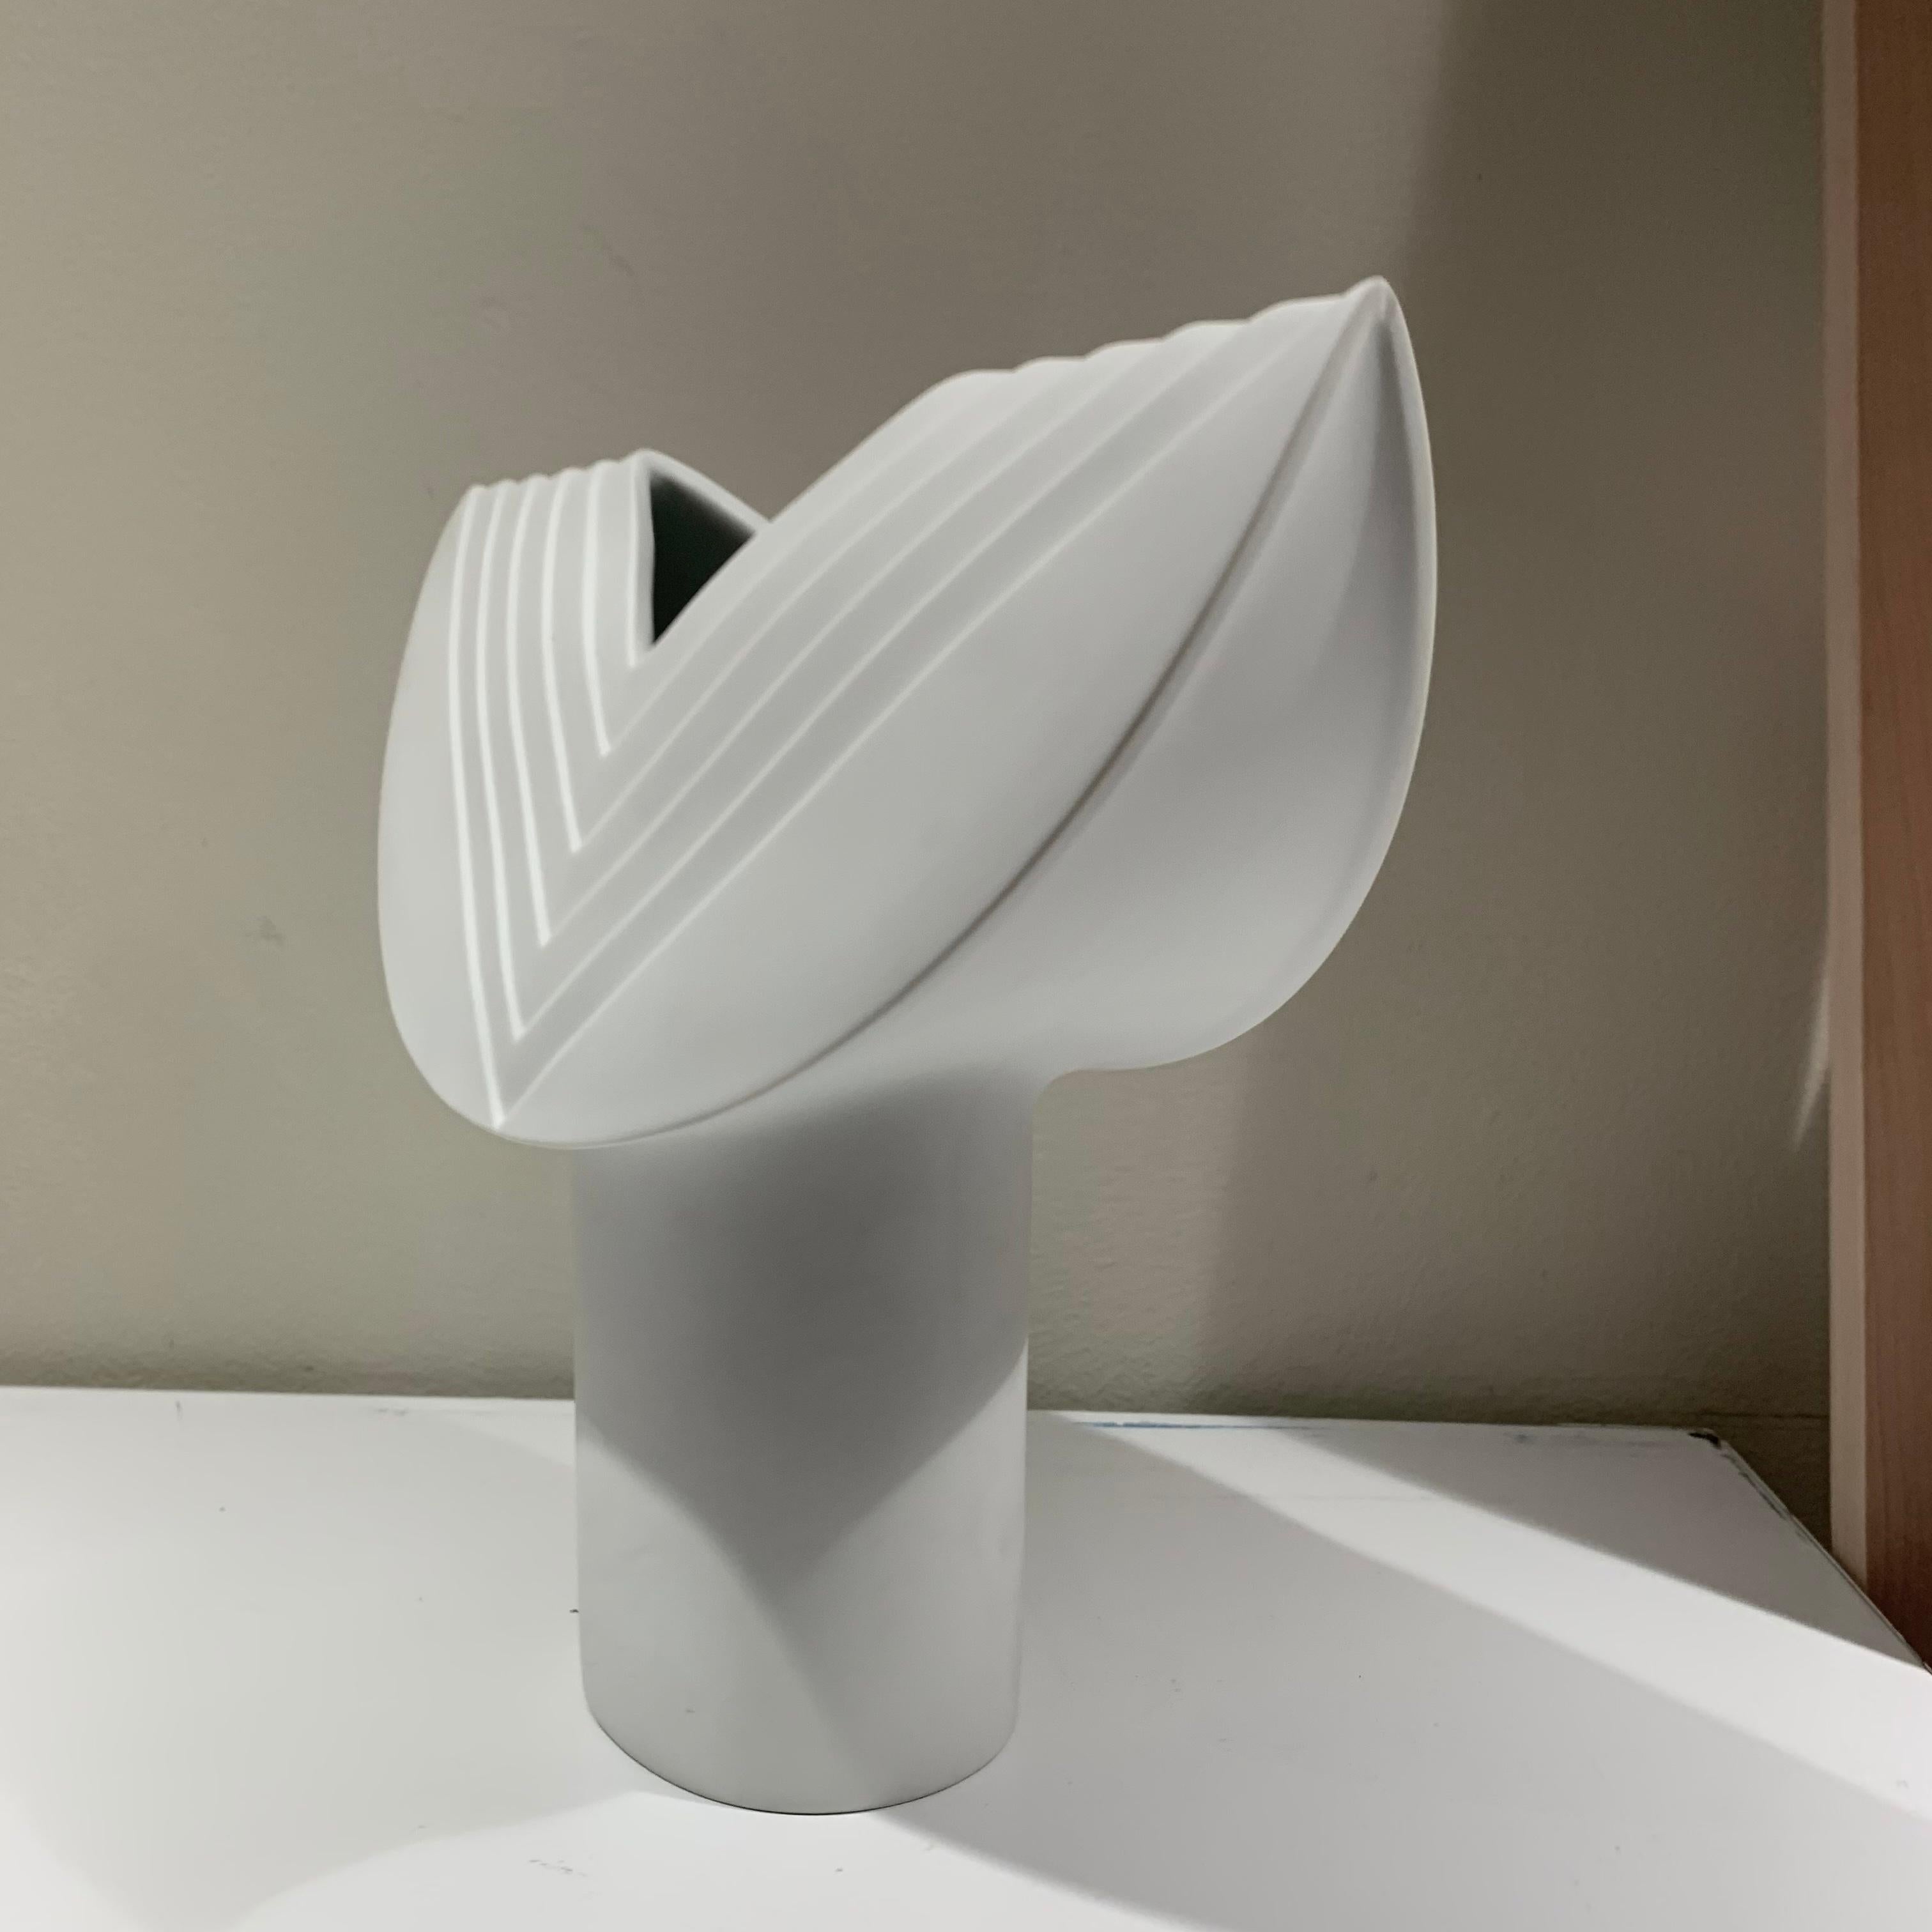 Ambrogio Pozzi for Rosenthal Studio-Line, Austria, white porcelain vase.